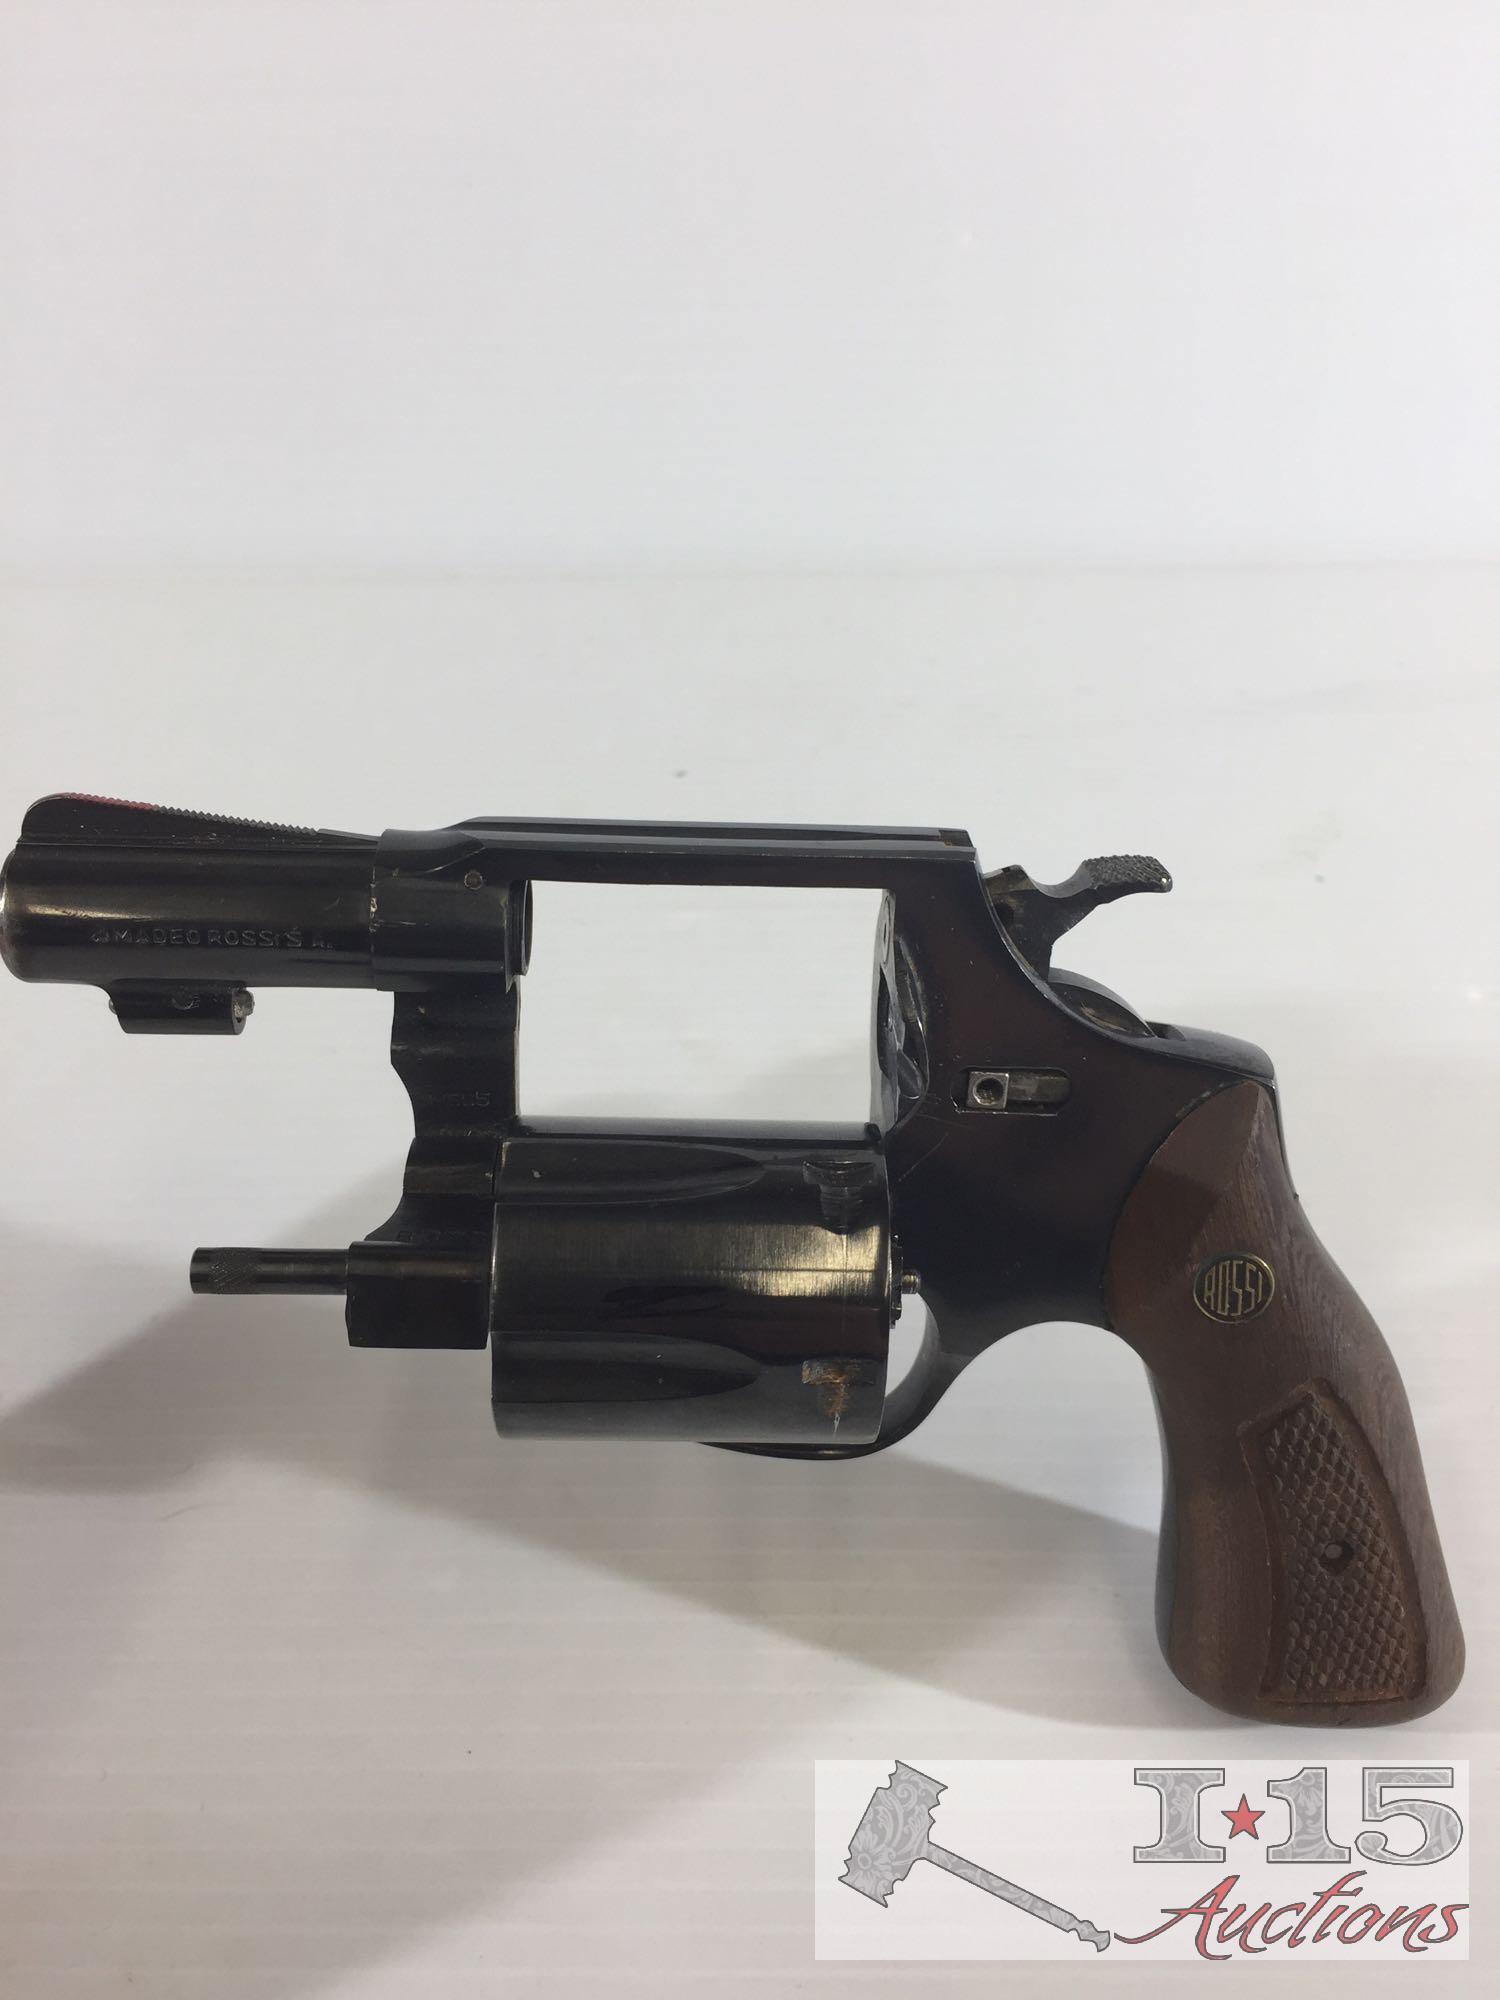 Rossi .38 special revolver